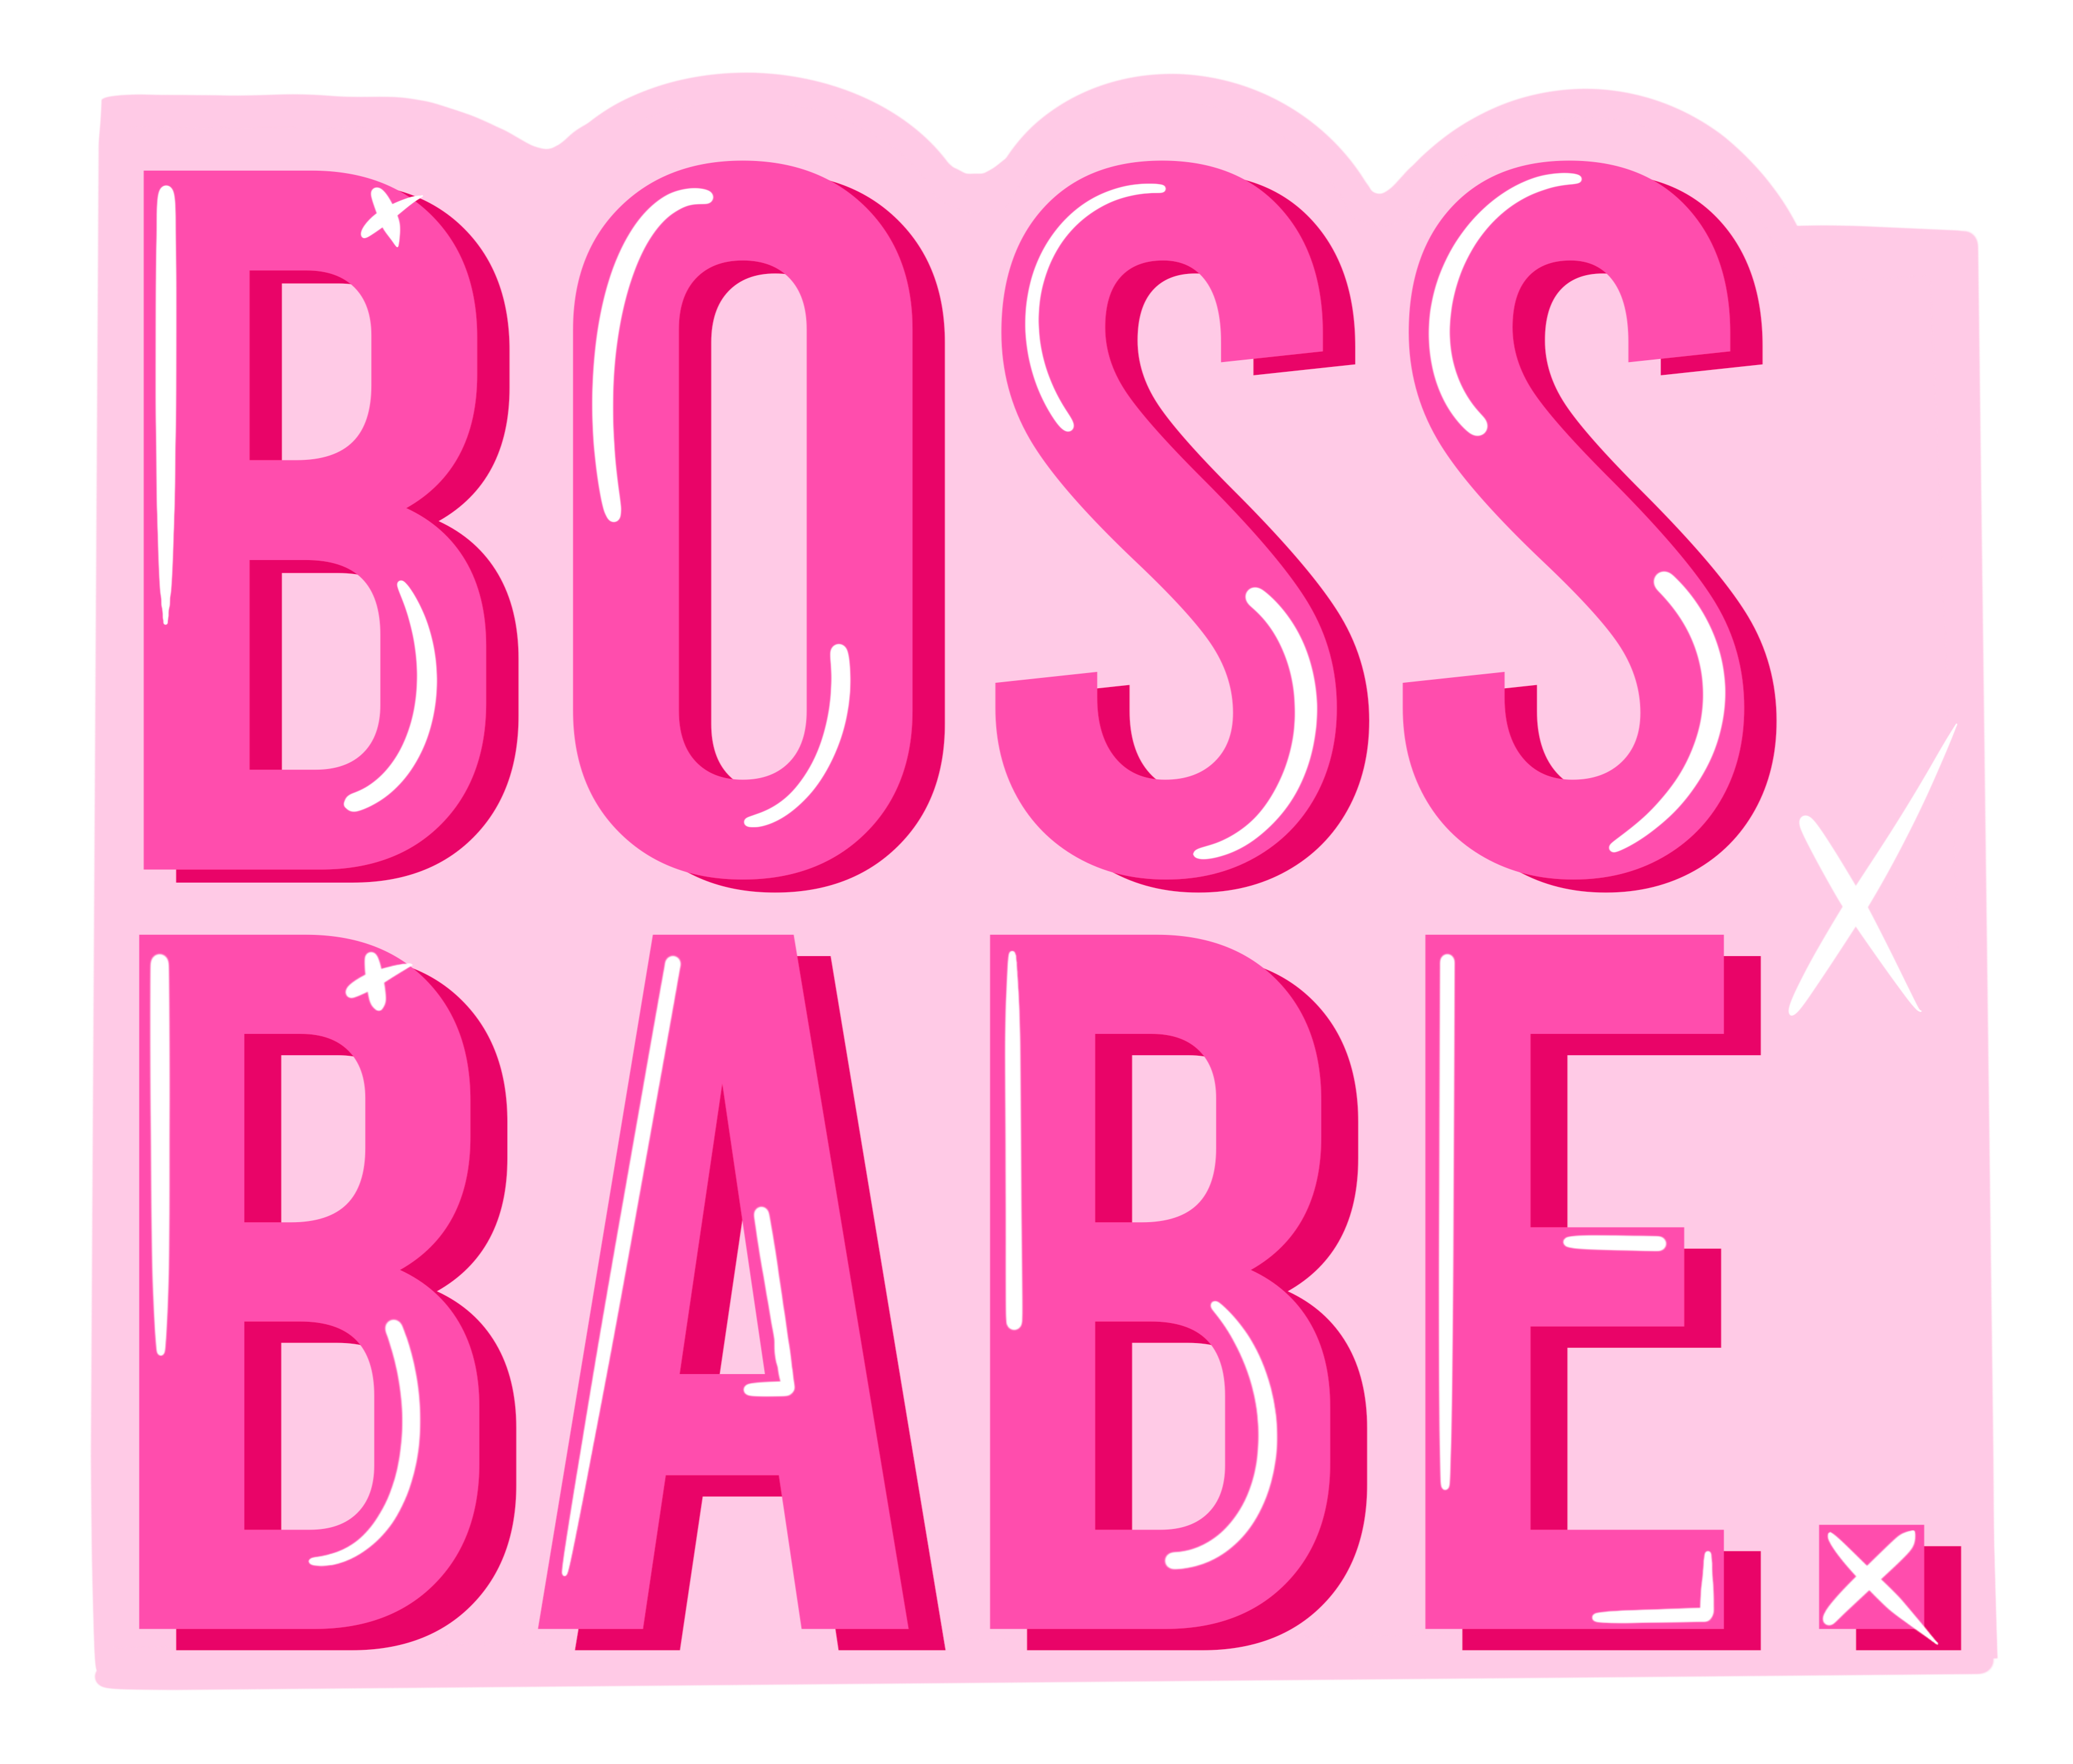 Boss Bitch Sticker, Howrad Studios